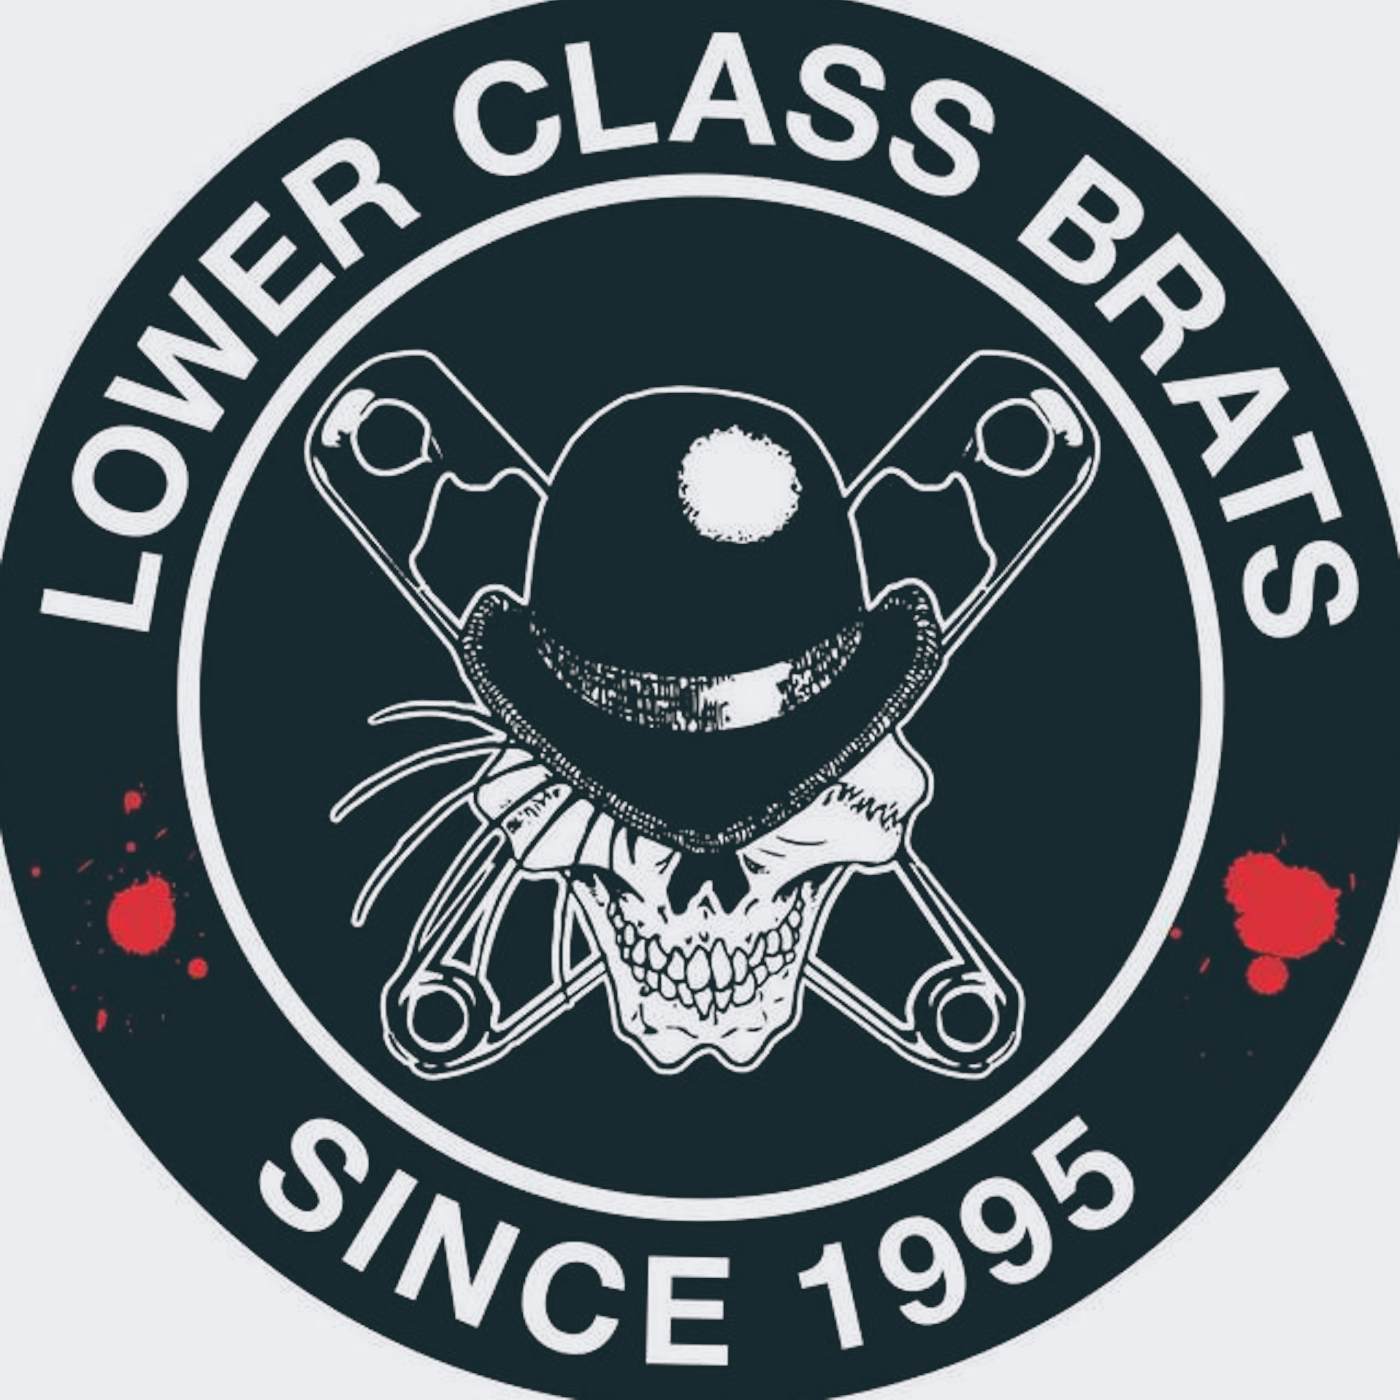 Lower Class Brats